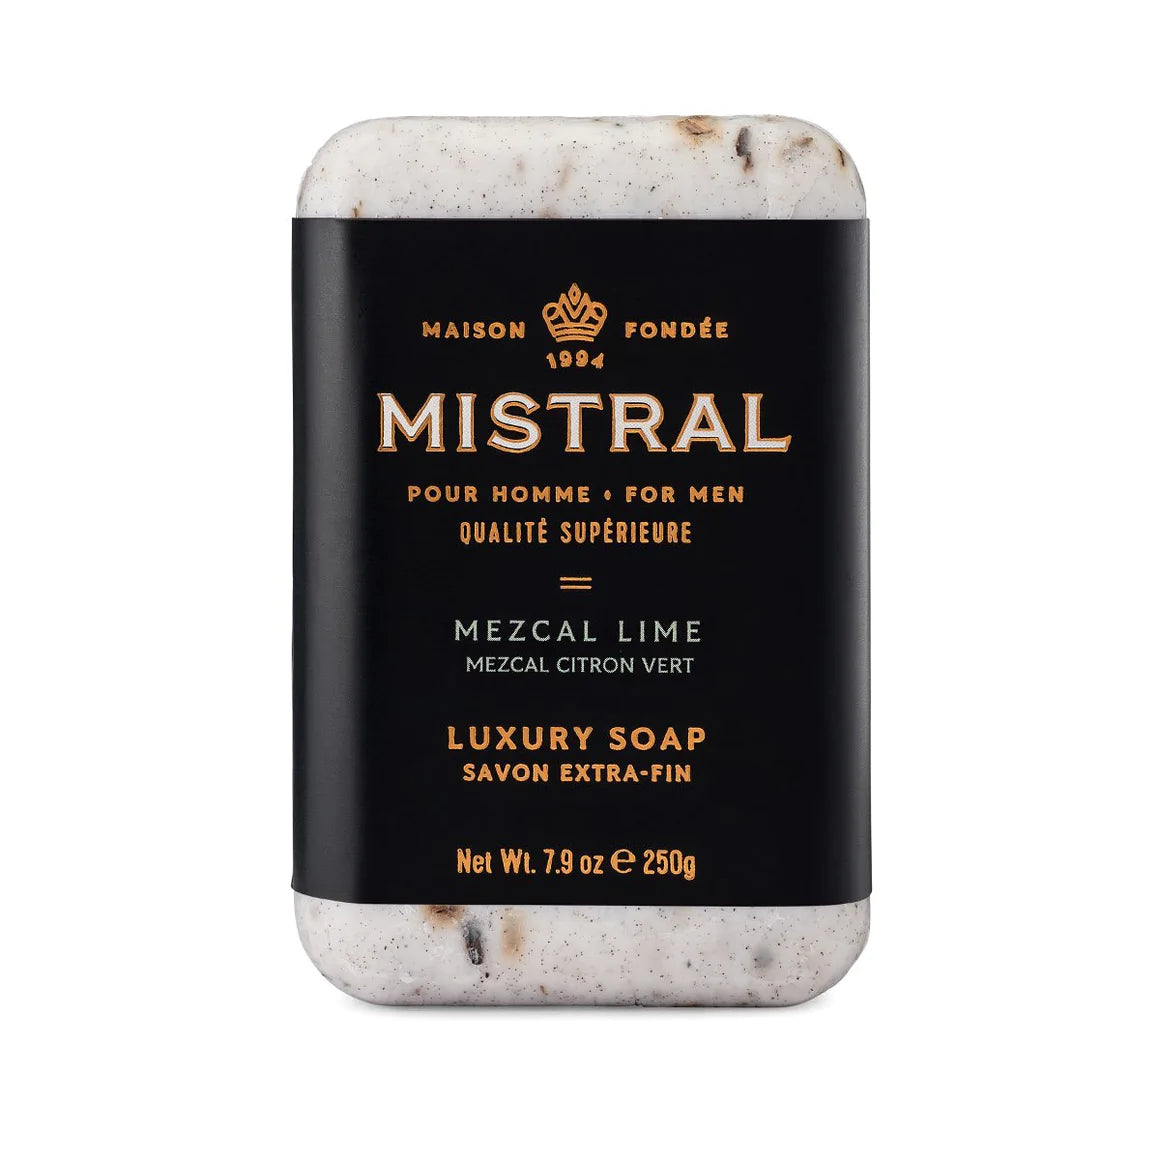 Mistral - Bar Soap - 250g-Men's Accessories-Mezcal Lime-Yaletown-Vancouver-Surrey-Canada